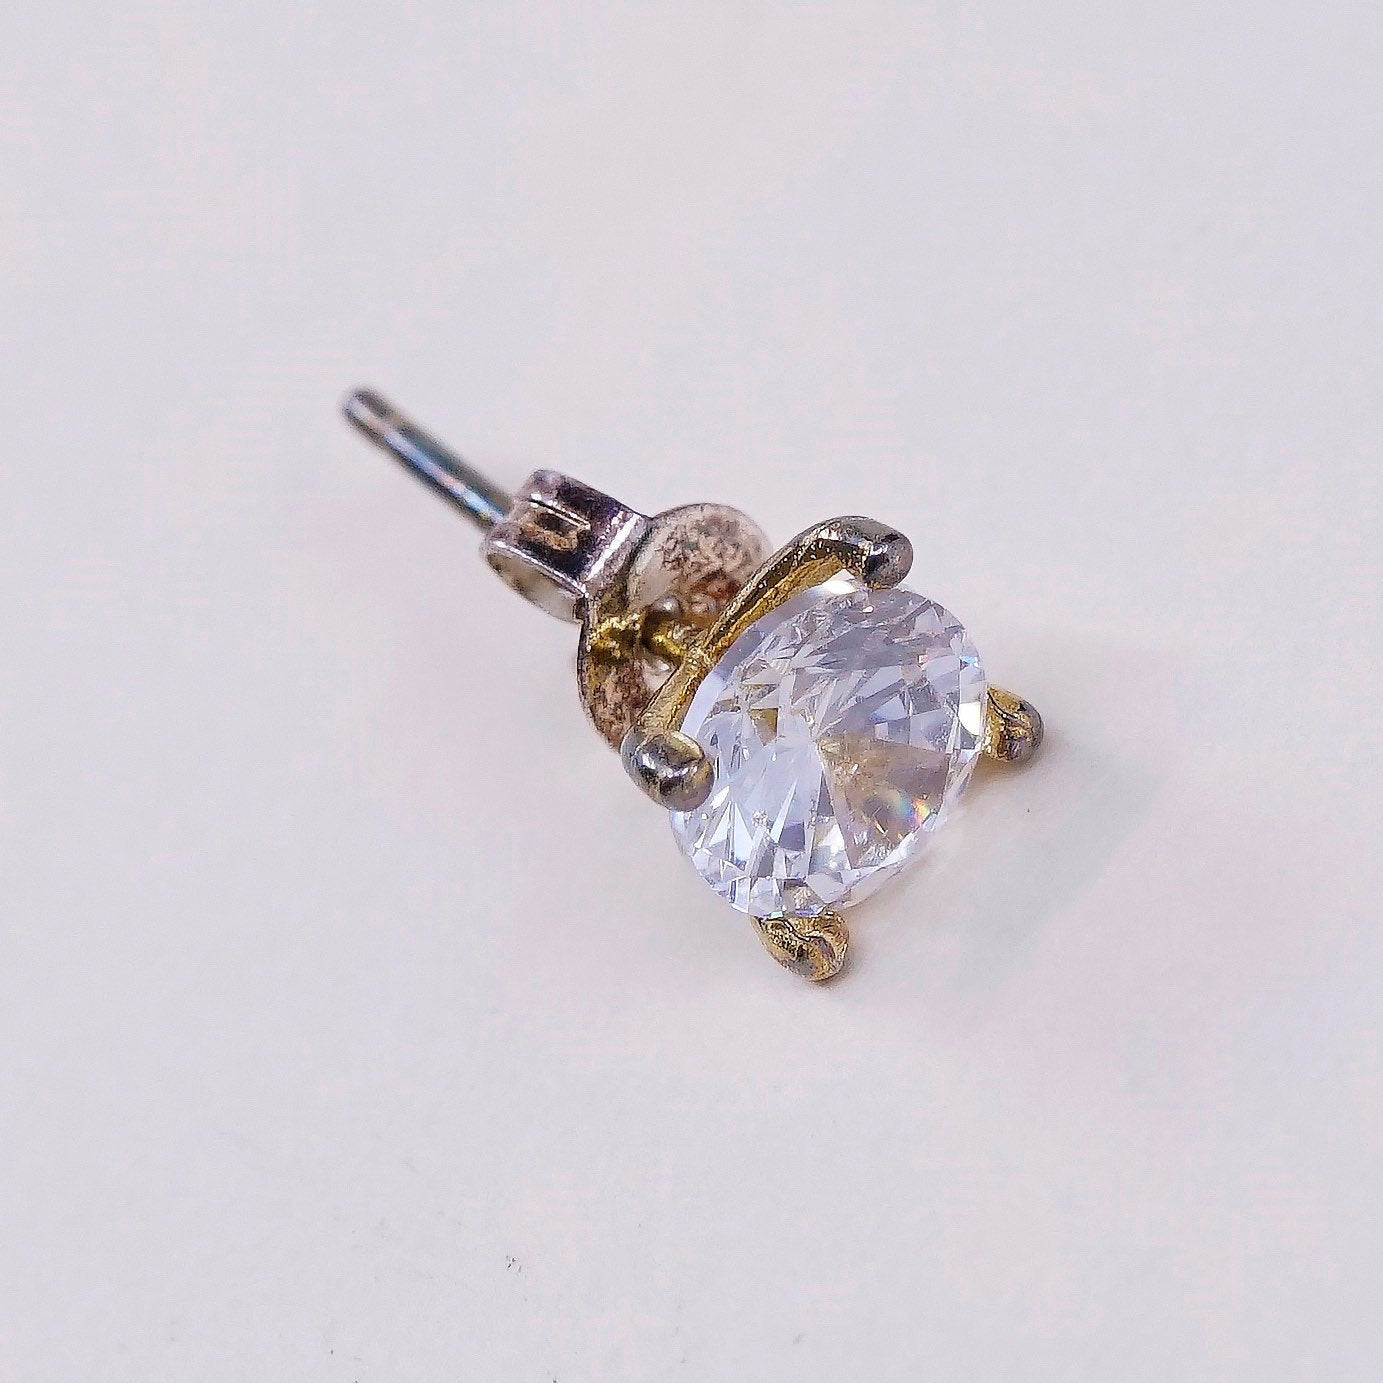 5mm, vtg sterling silver genuine cz studs, fashion minimalist earrings